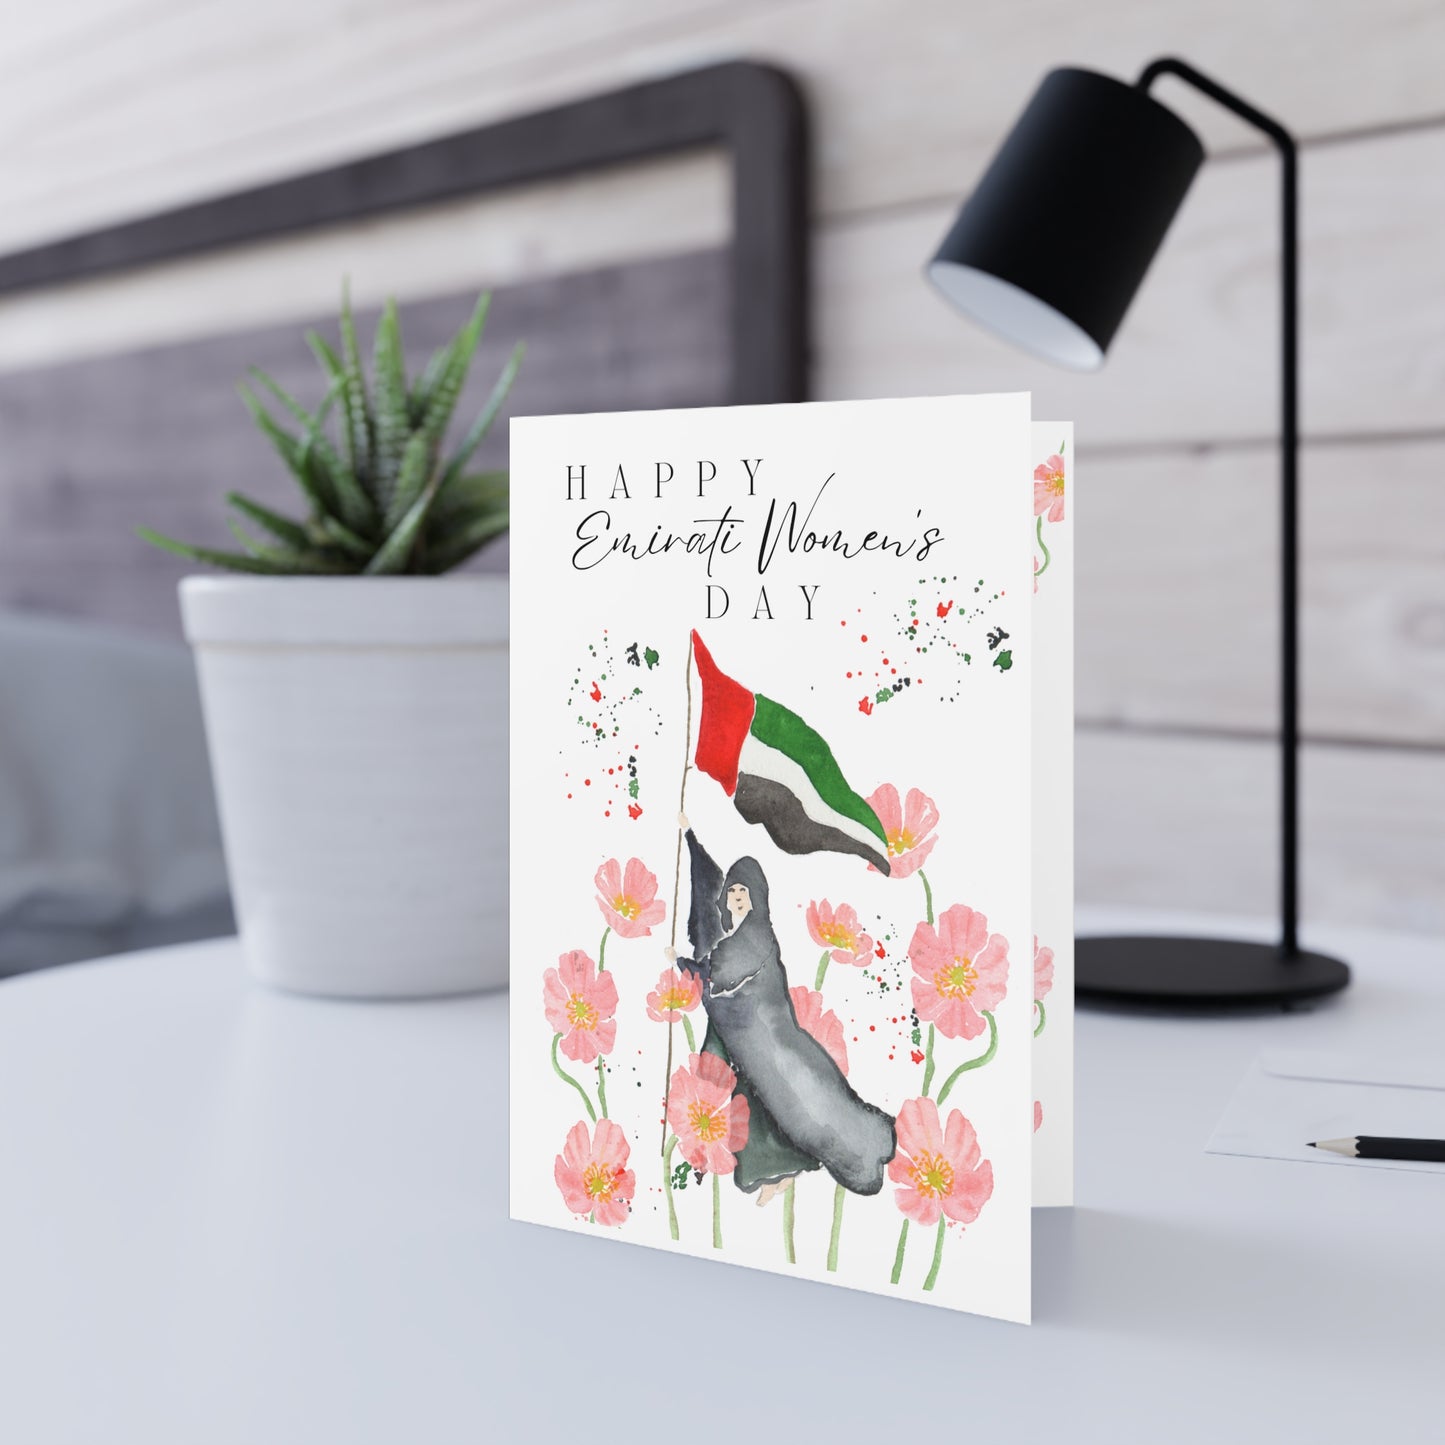 Happy Emirai women's day Handmade card with watercolor illustration